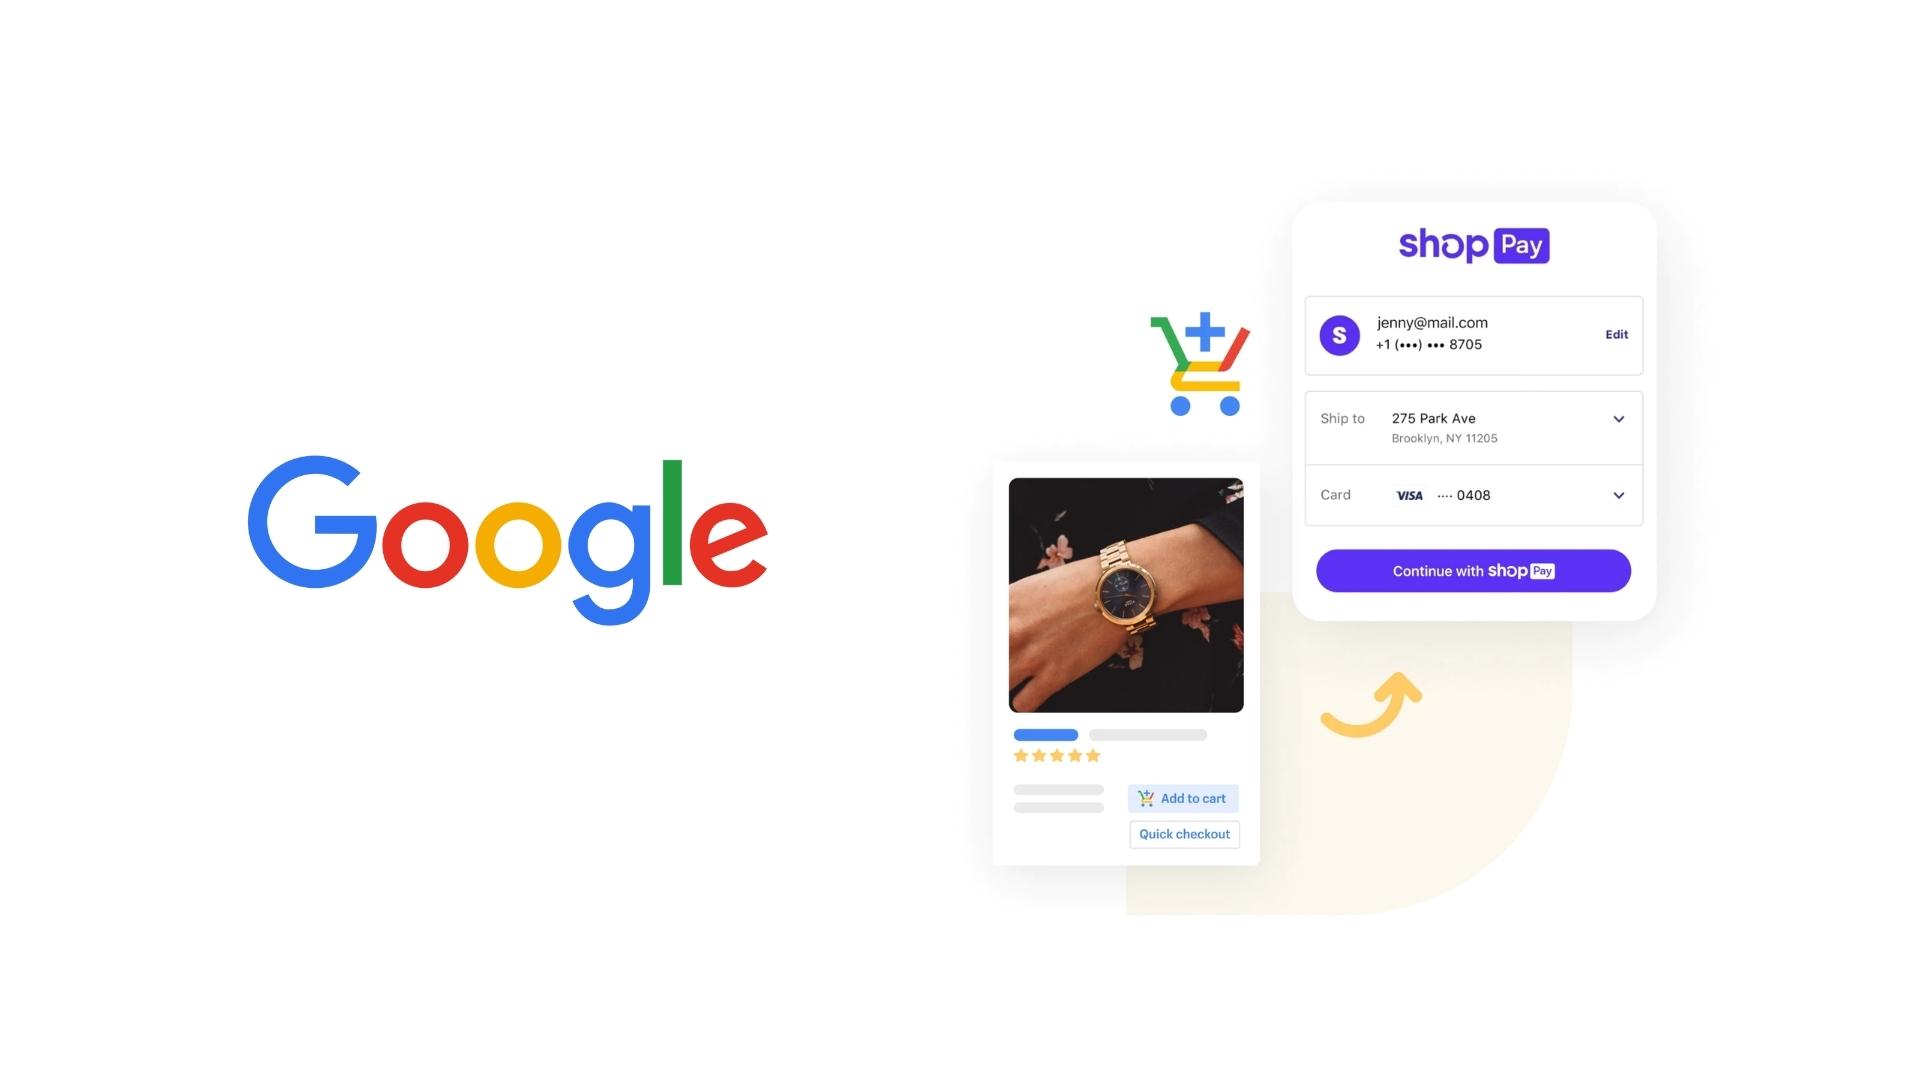 Google partnership with Shopify